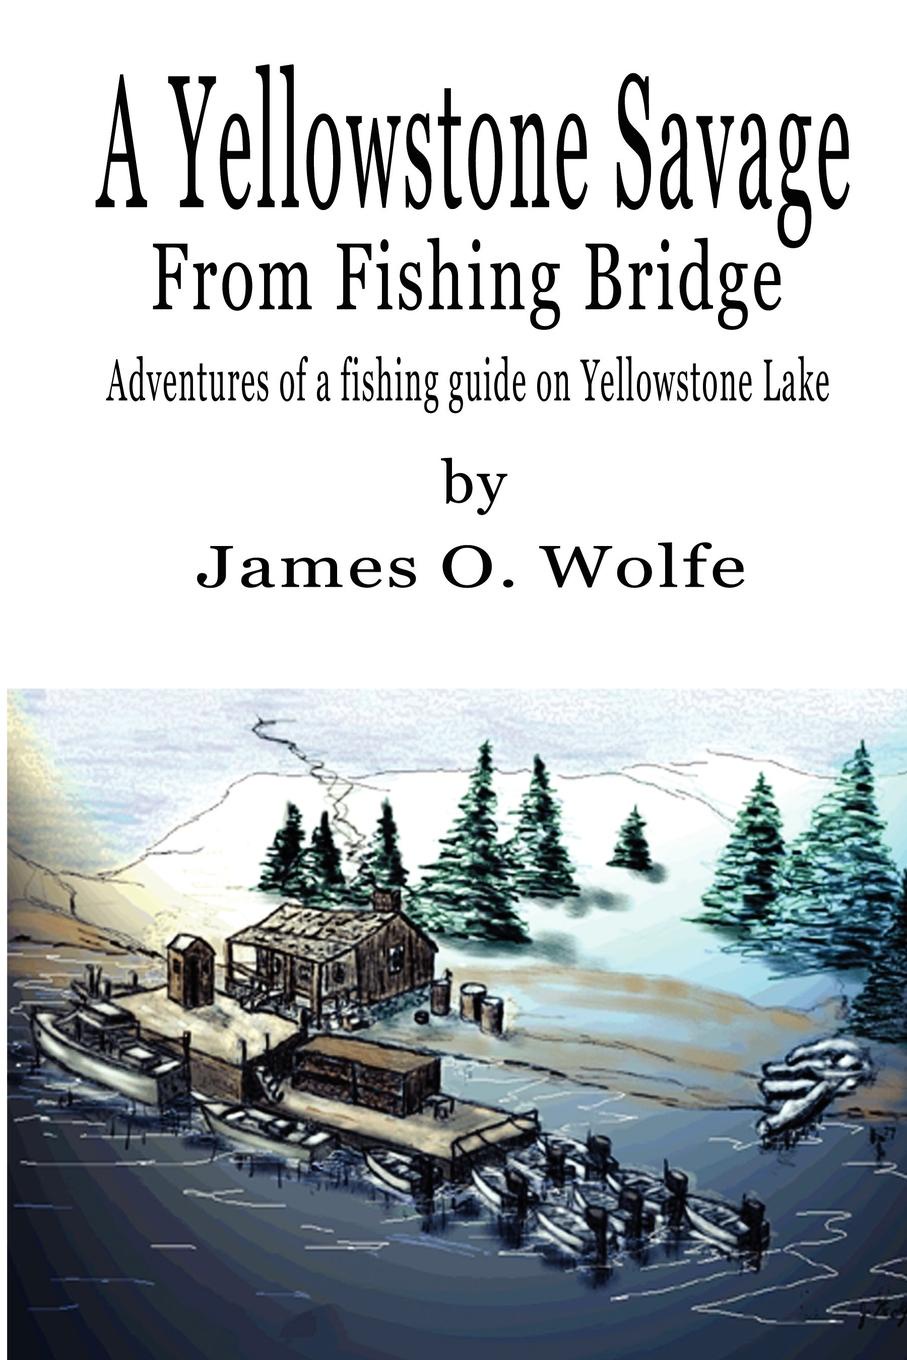 A Yellowstone Savage from Fishing Bridge. Adventures of a fishing guide on Yellowstone Lake